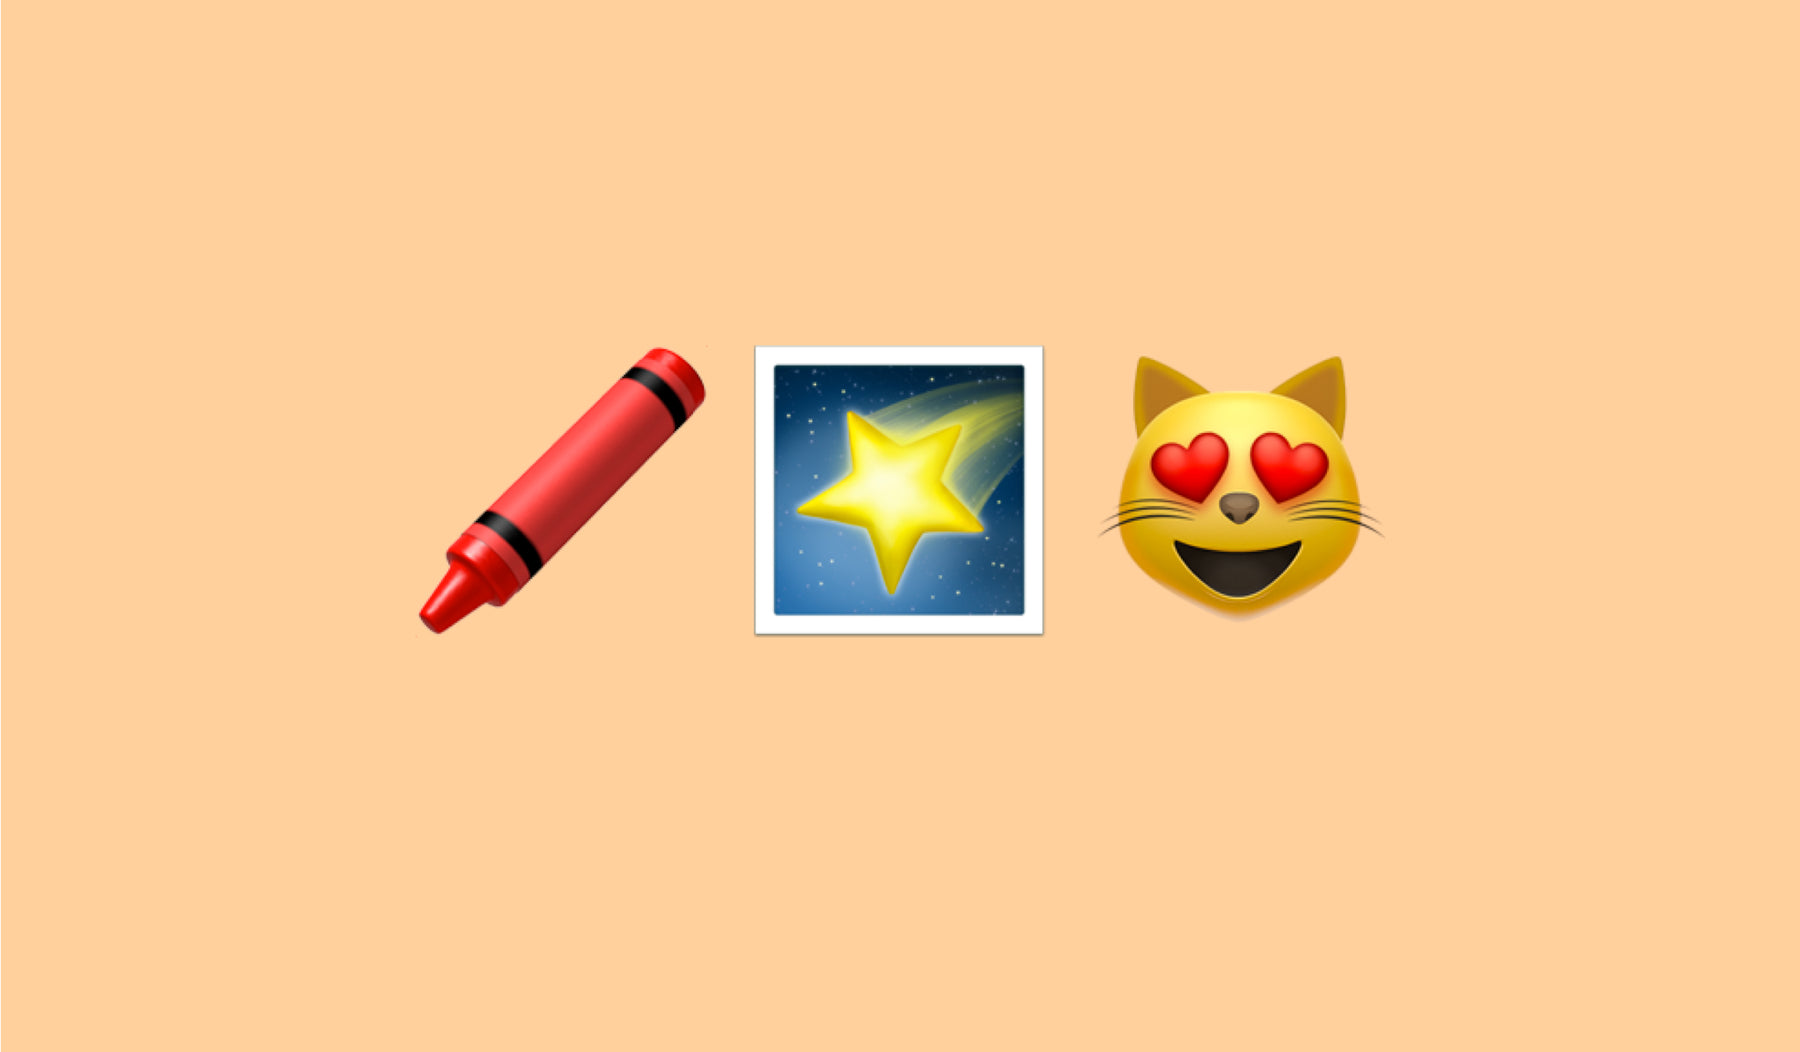 Crayon, star, and cat heart eye emojis